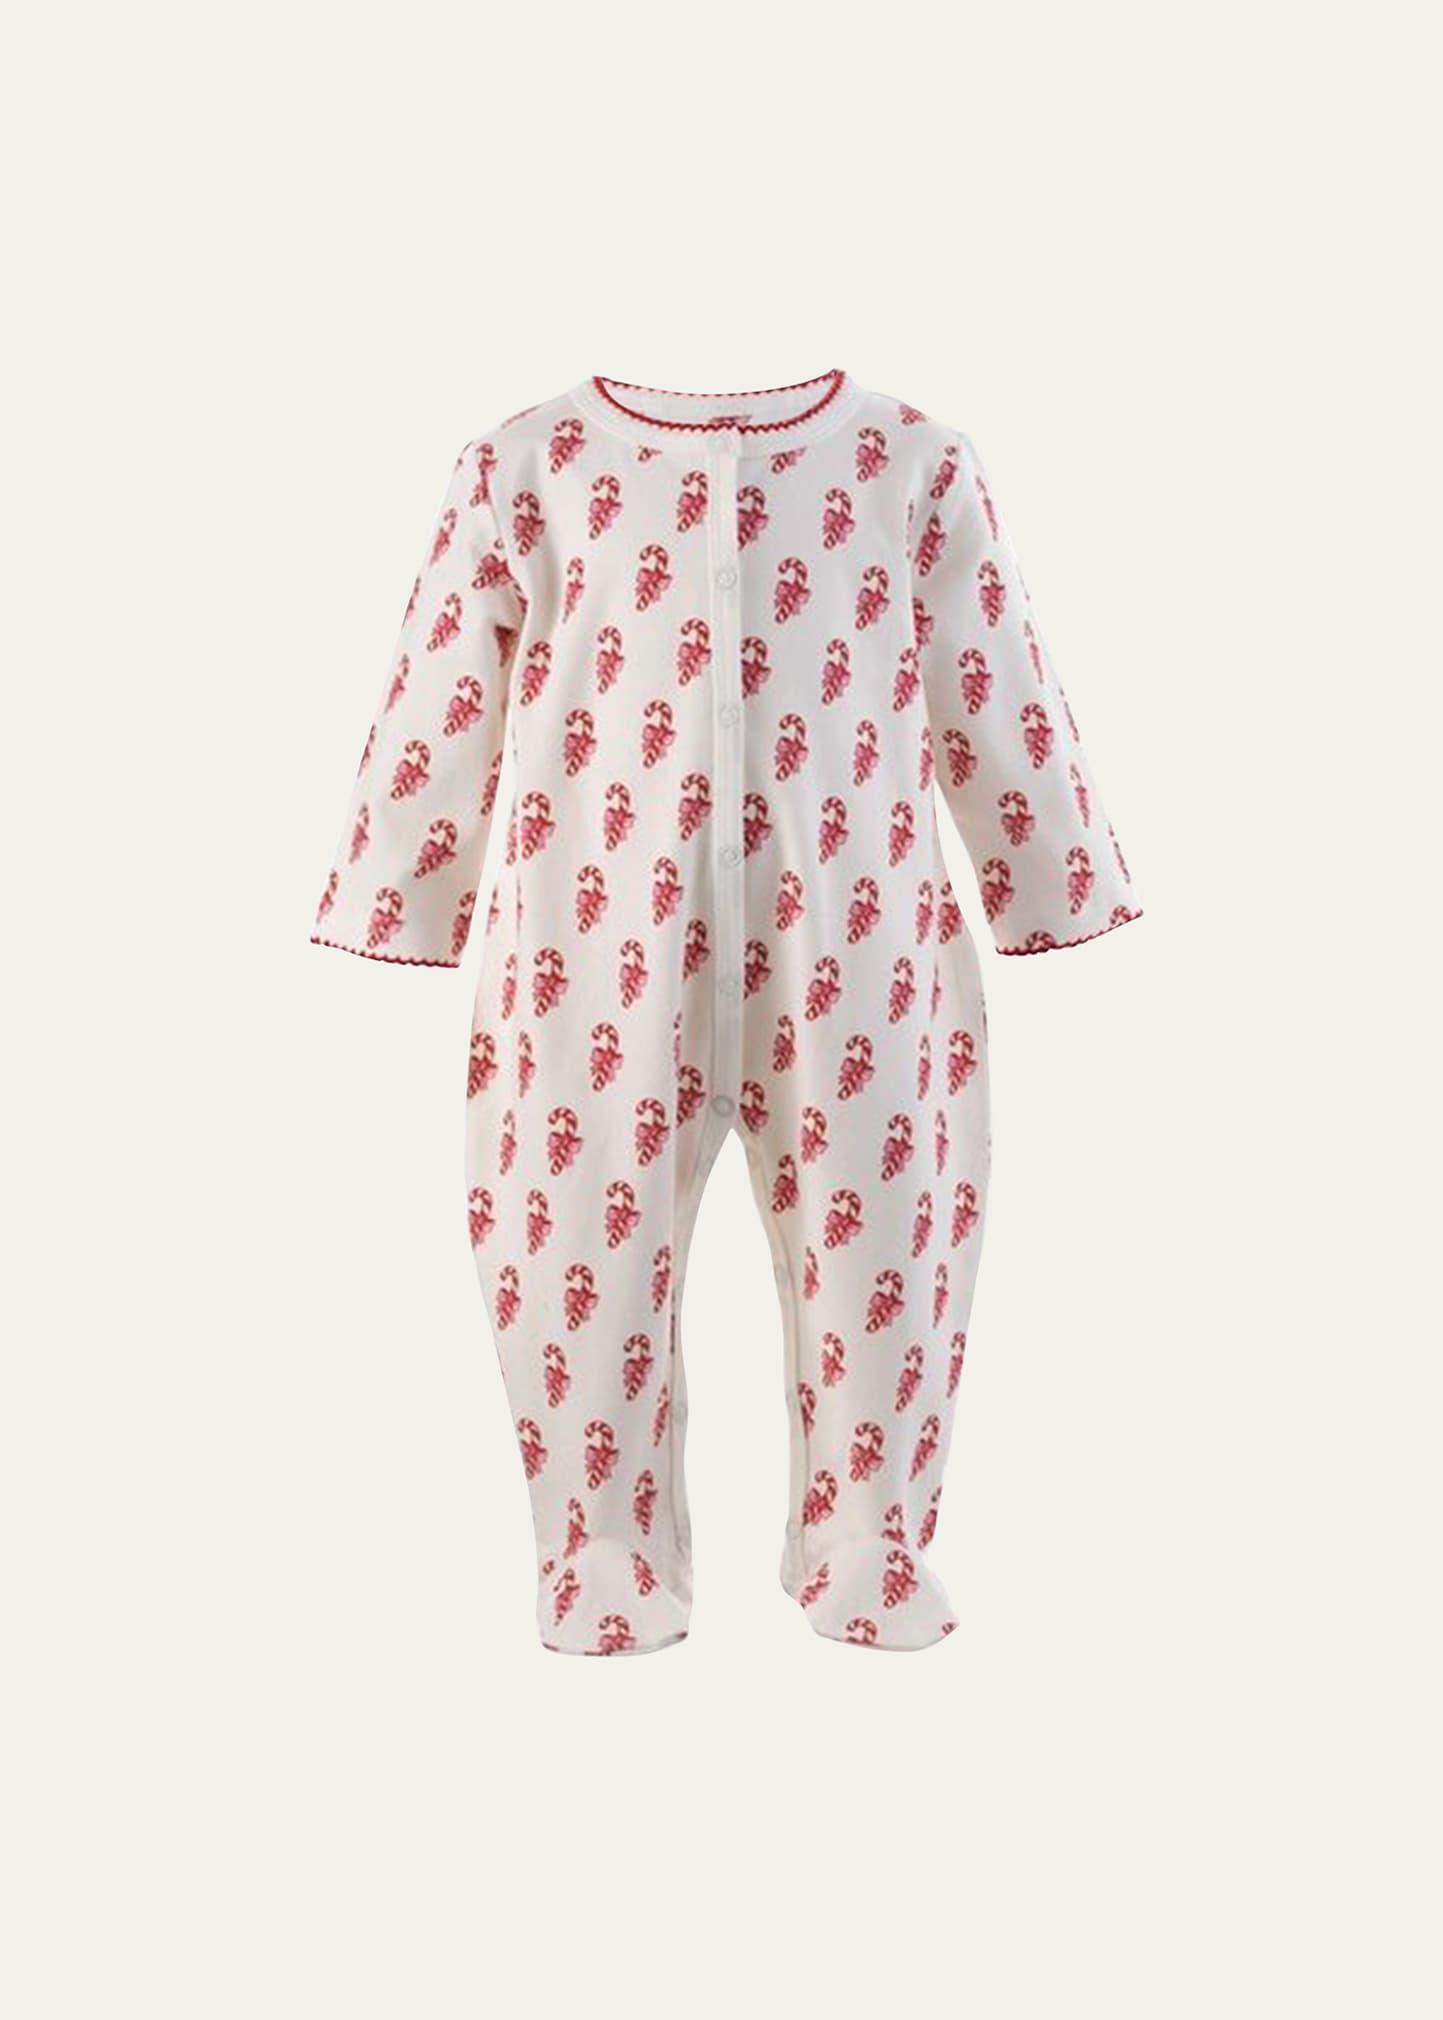 Rachel Riley Kids' Girl's Candy Cane Babygro Footie Pajamas In Red